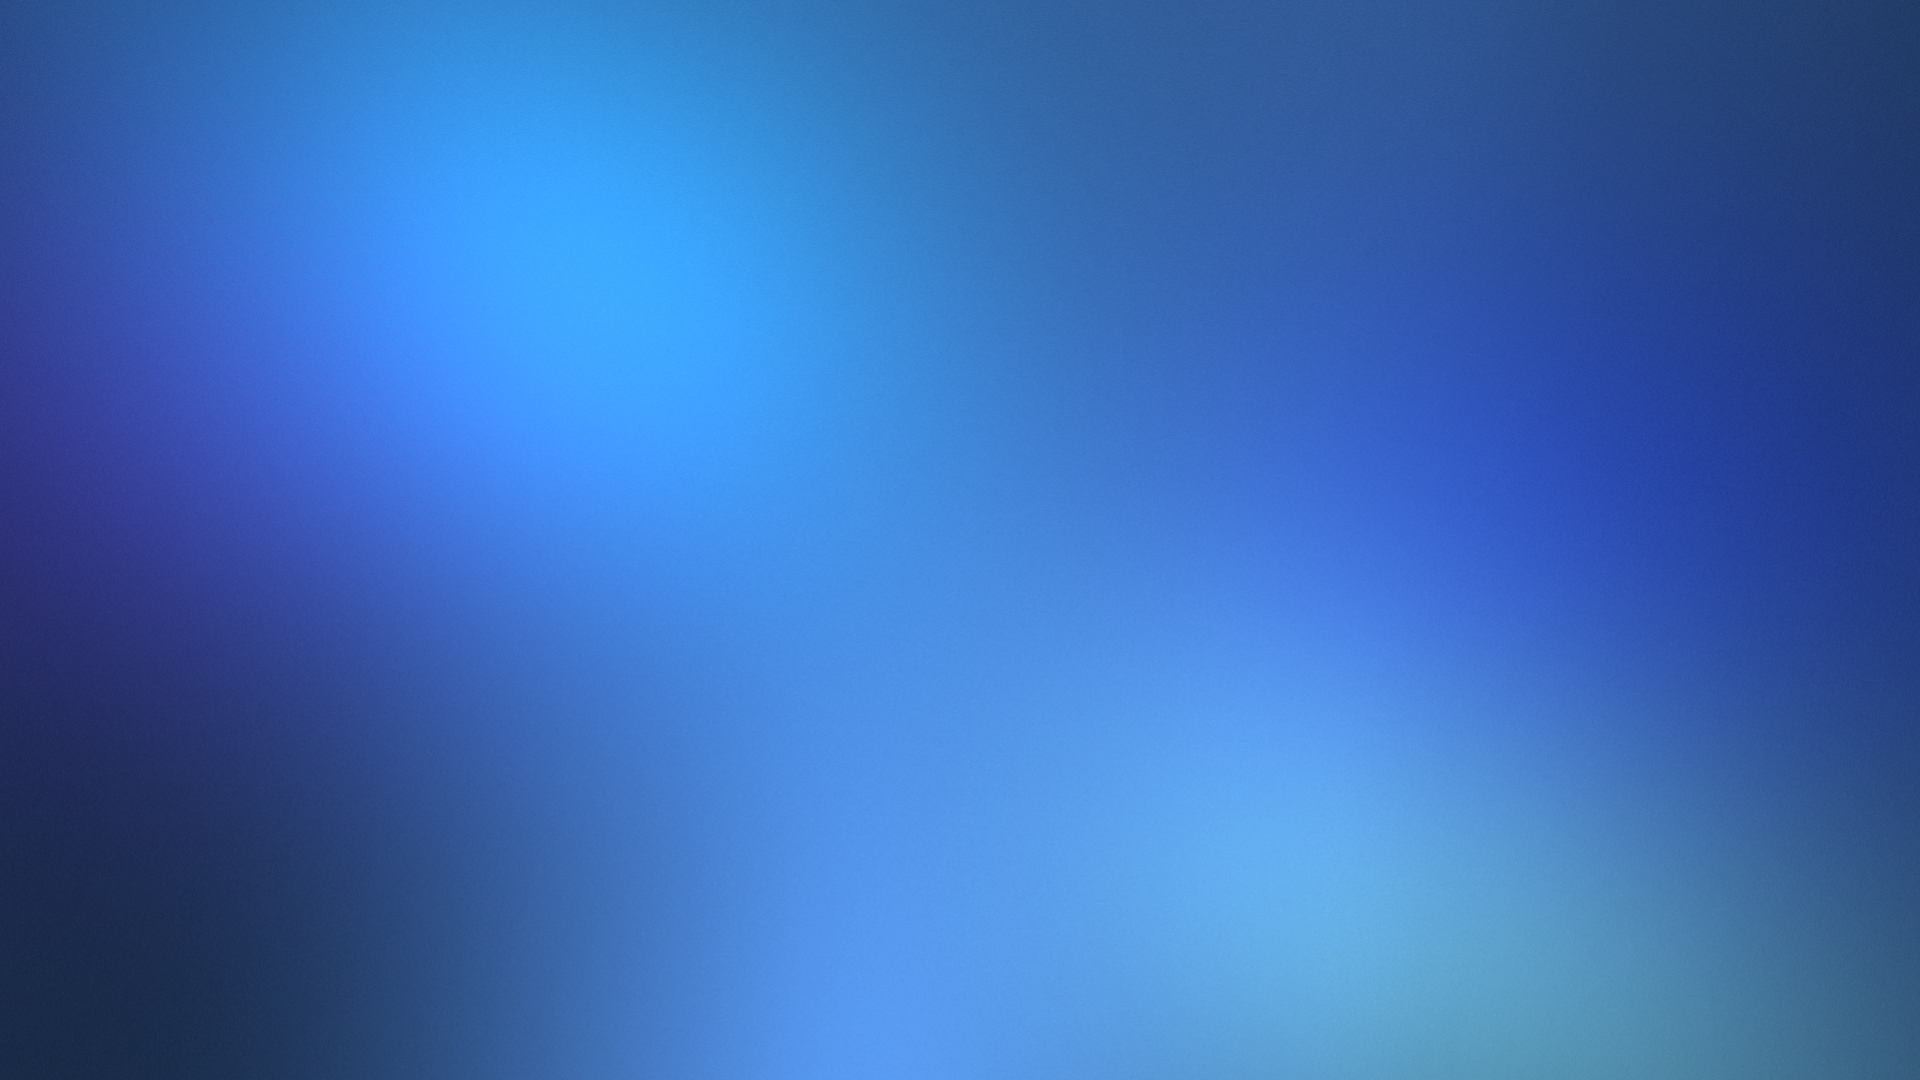 hd tablet wallpaper 1280x800,blue,sky,cobalt blue,daytime,electric blue